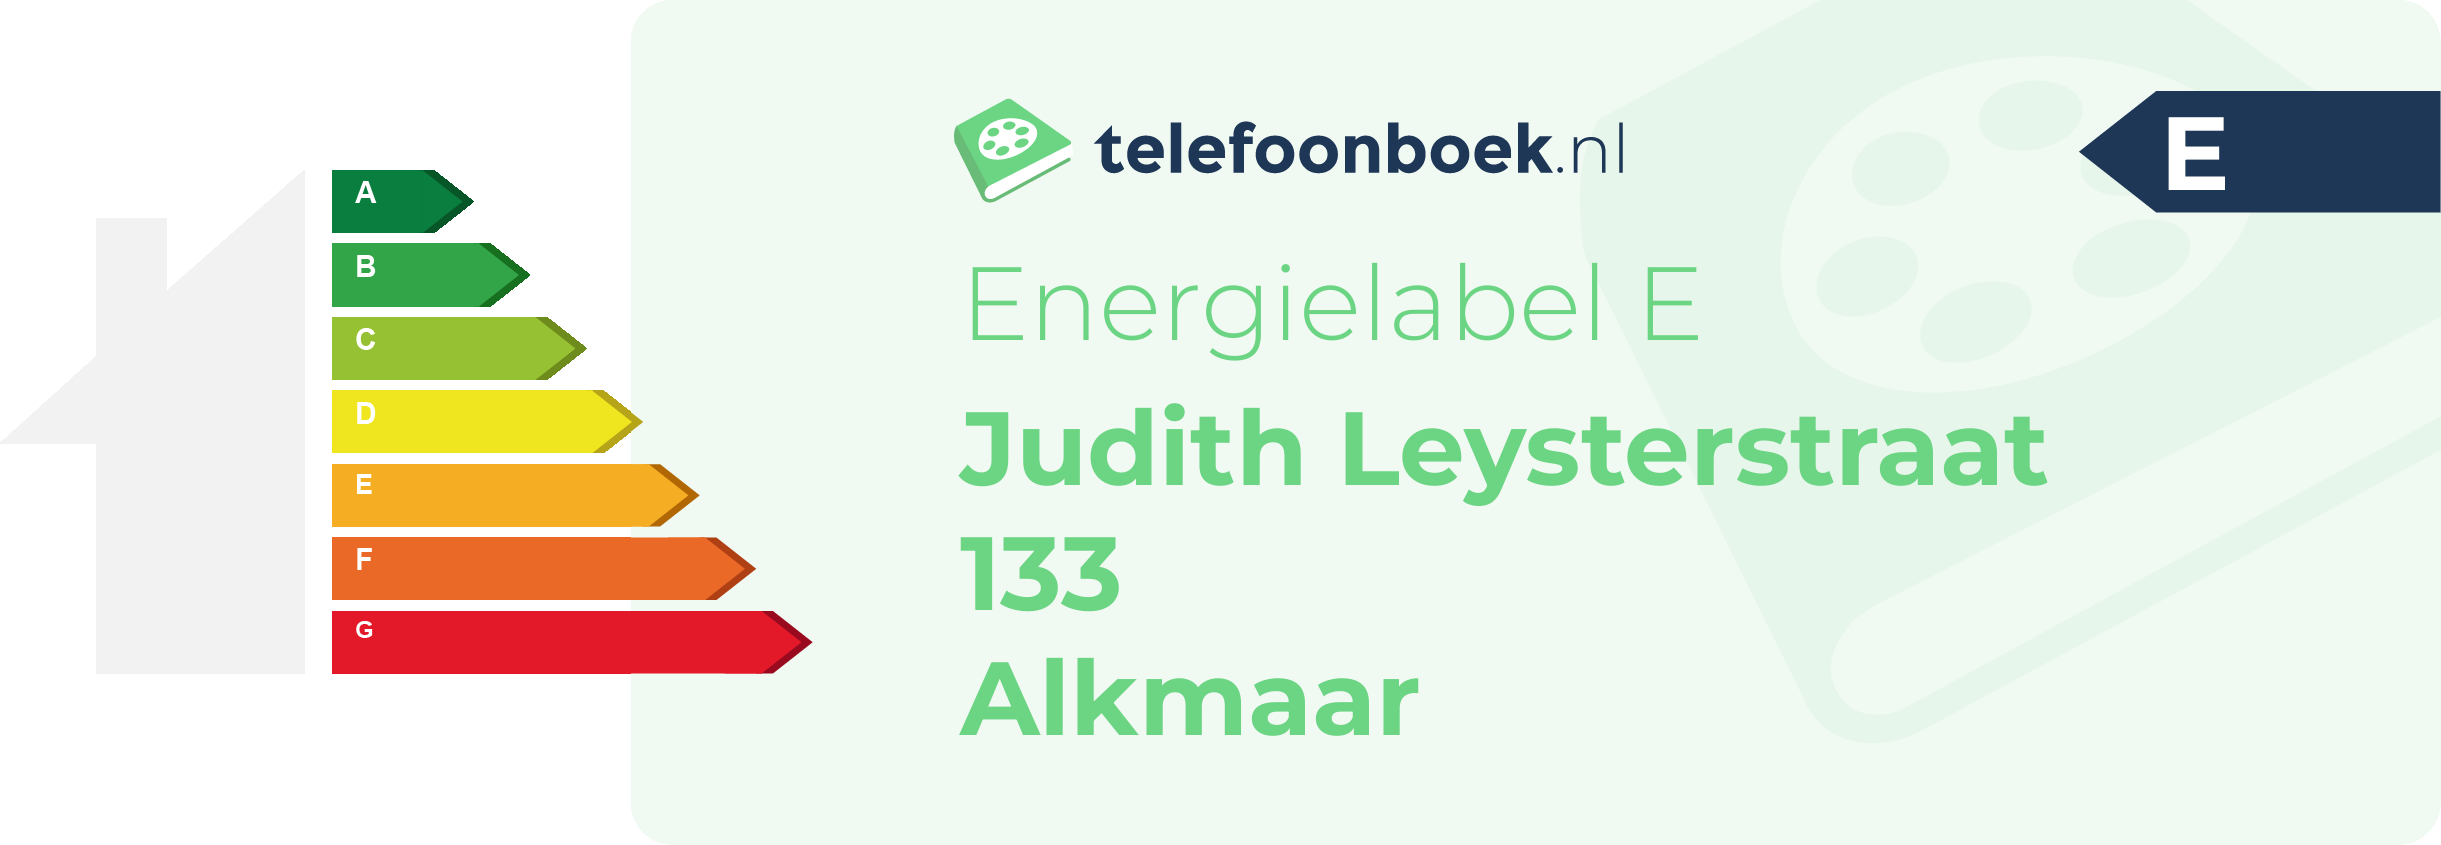 Energielabel Judith Leysterstraat 133 Alkmaar